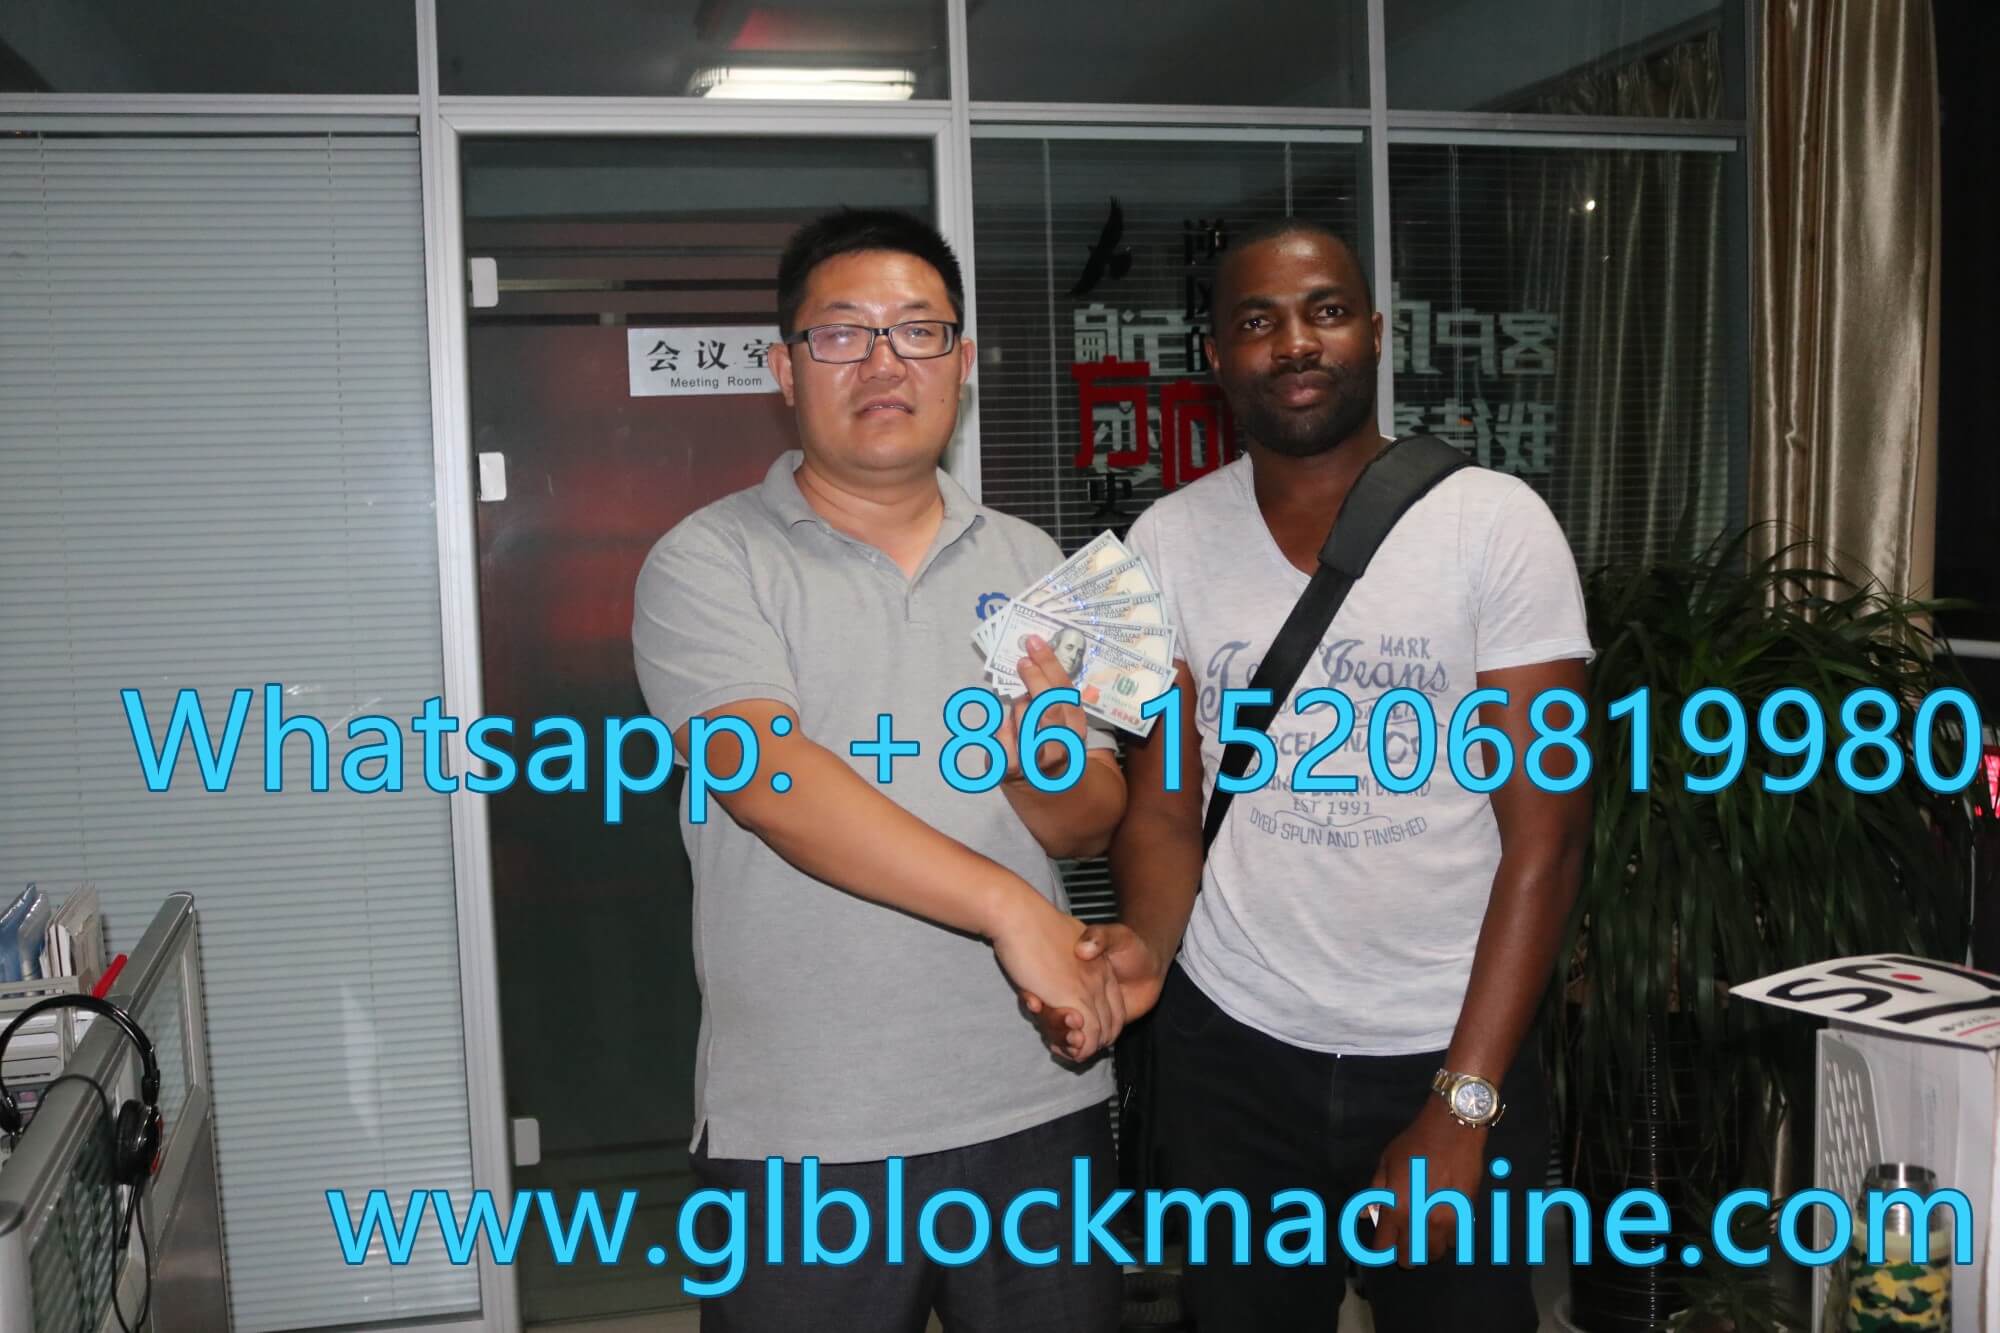 Uganda client purchase GiantLin QT40-2 concrete block making machine and pay cash as deposit 